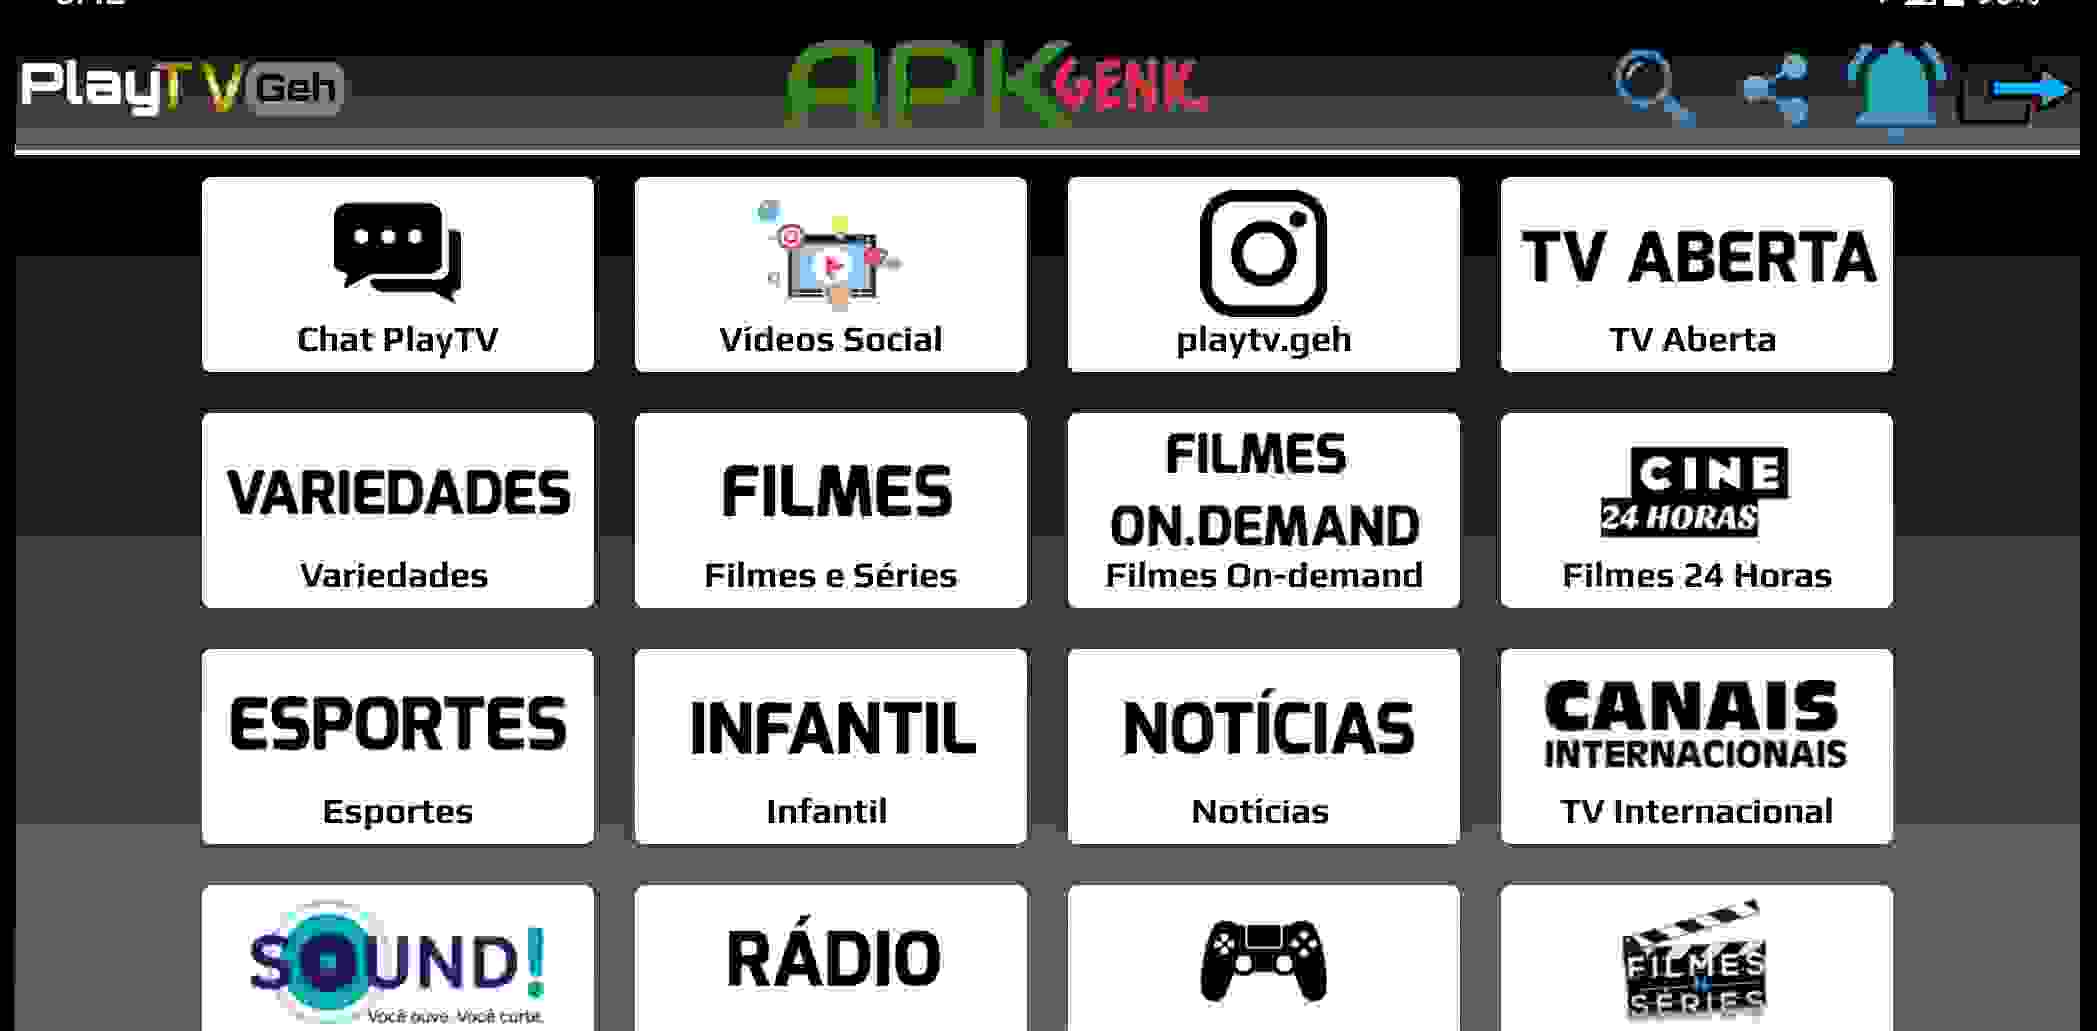 Playtv Geh screenshot